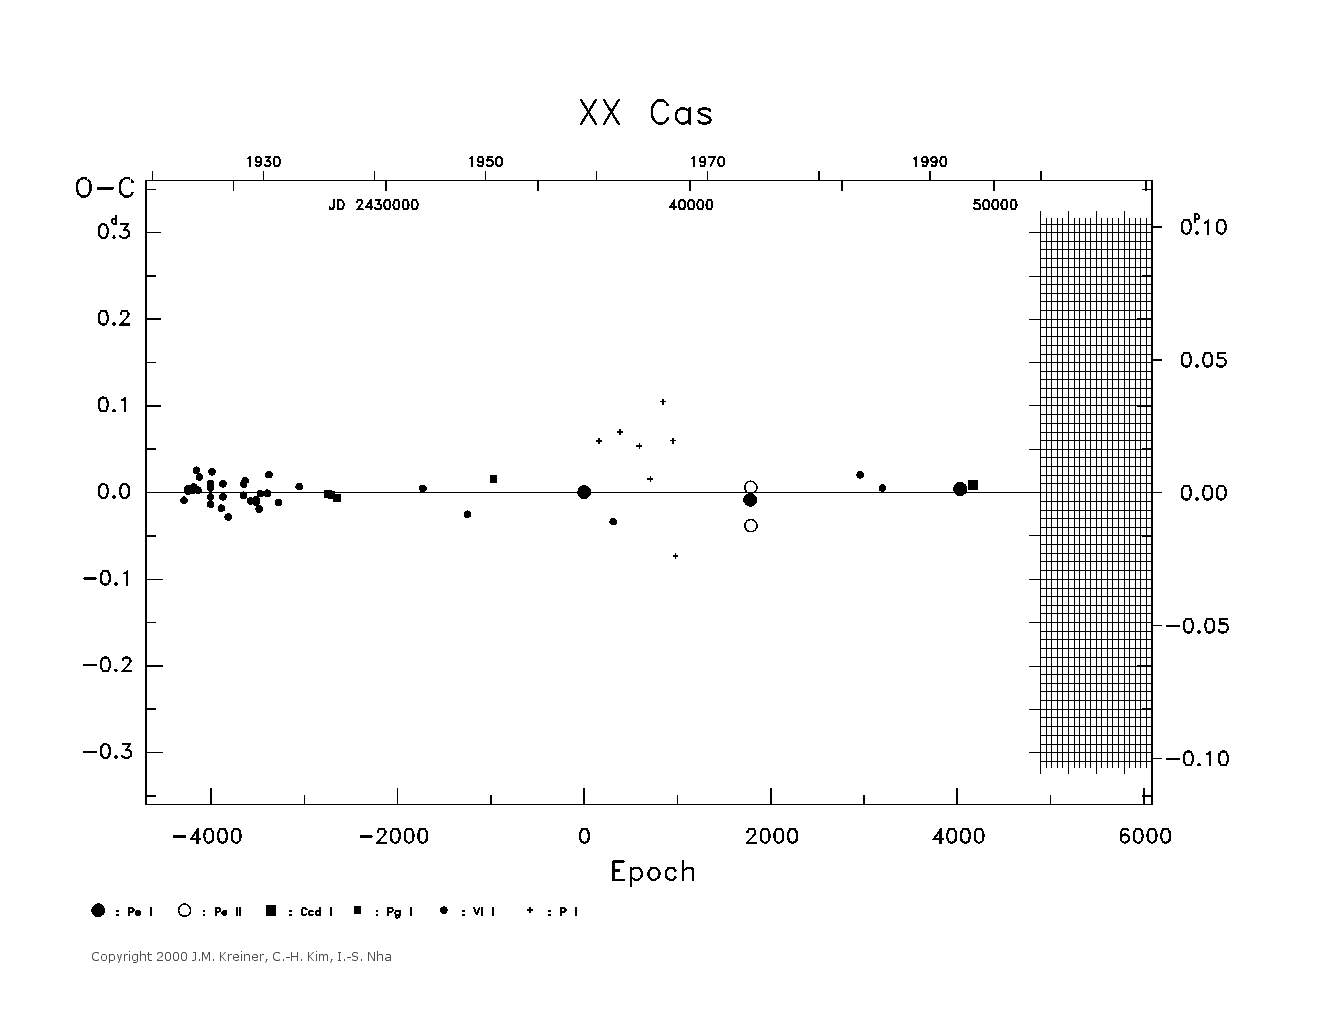 [IMAGE: large XX CAS O-C diagram]